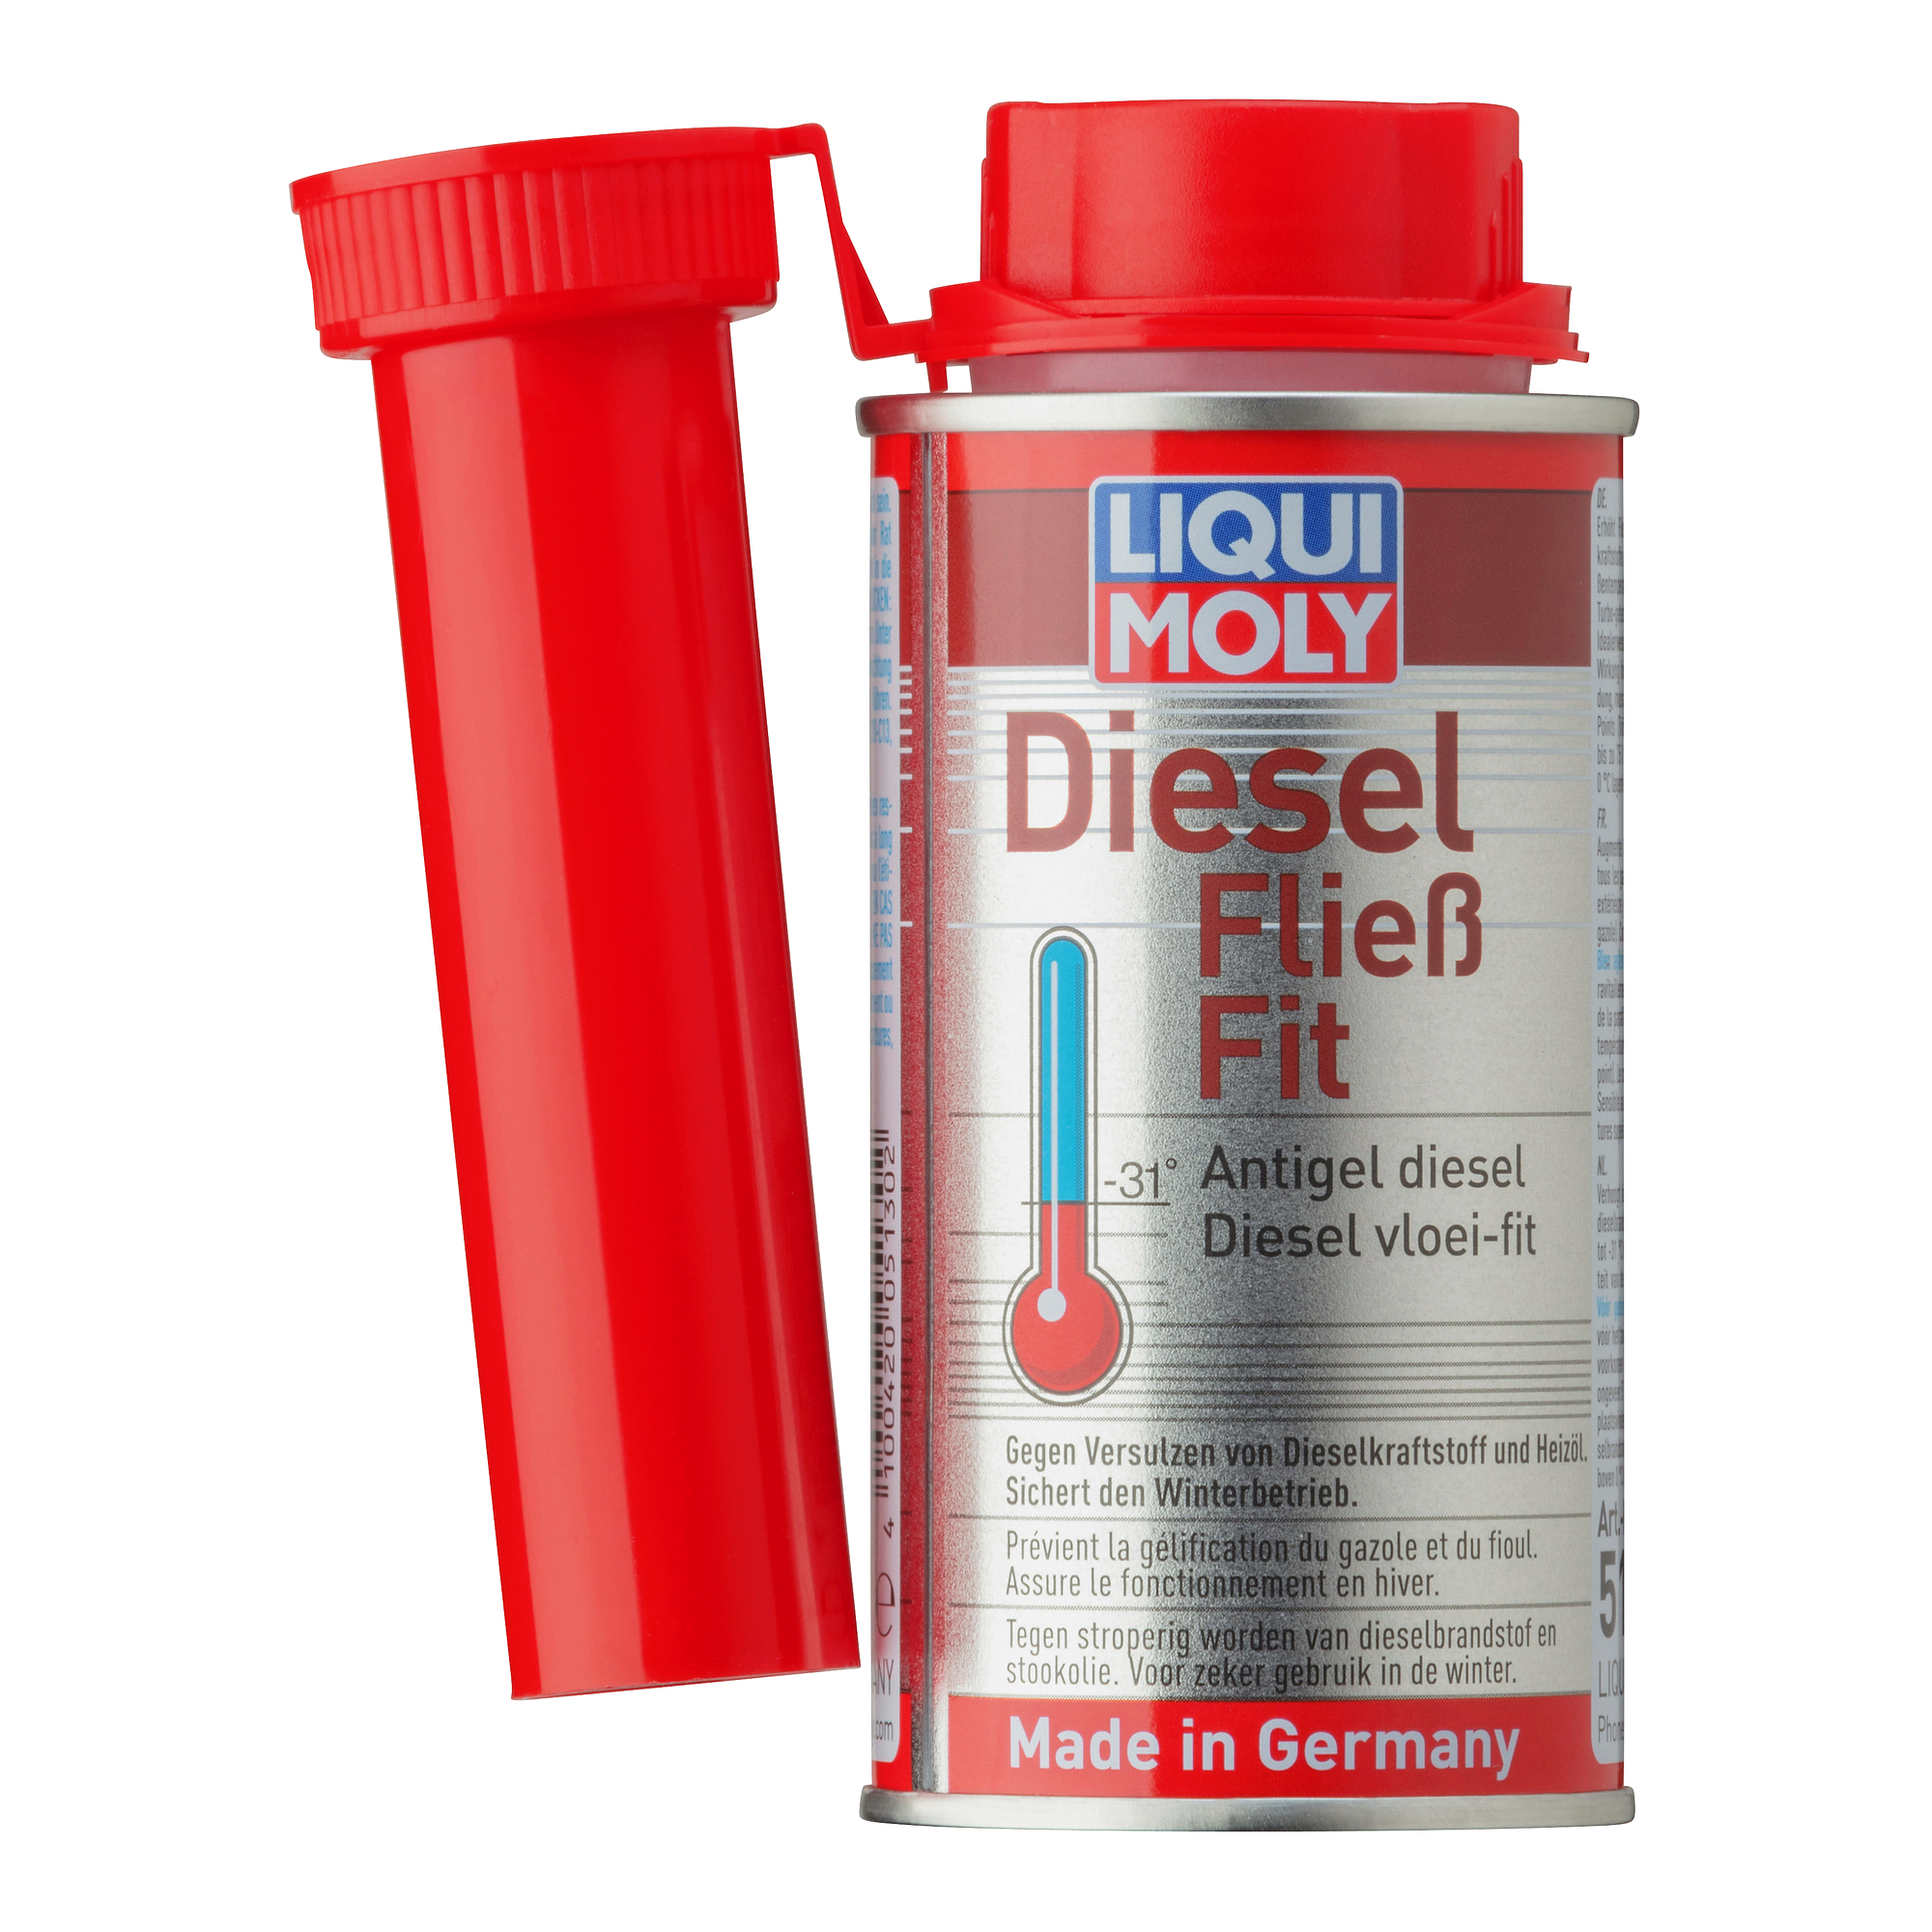 Additiv Diesel Fließ Fit 150 ml + product picture